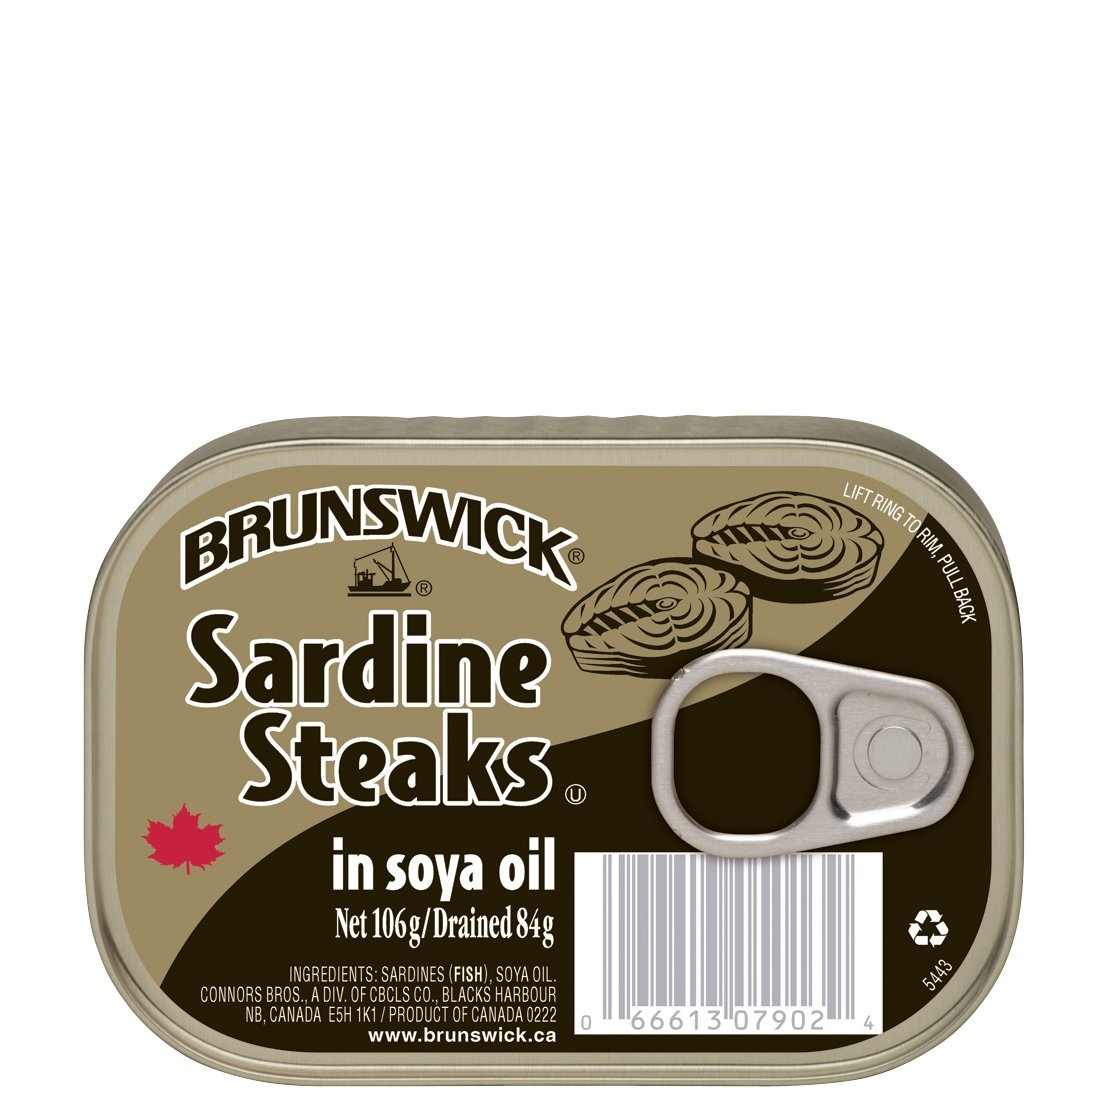 BRUNSWICK SARDINE STEAK SOYA OIL 106g